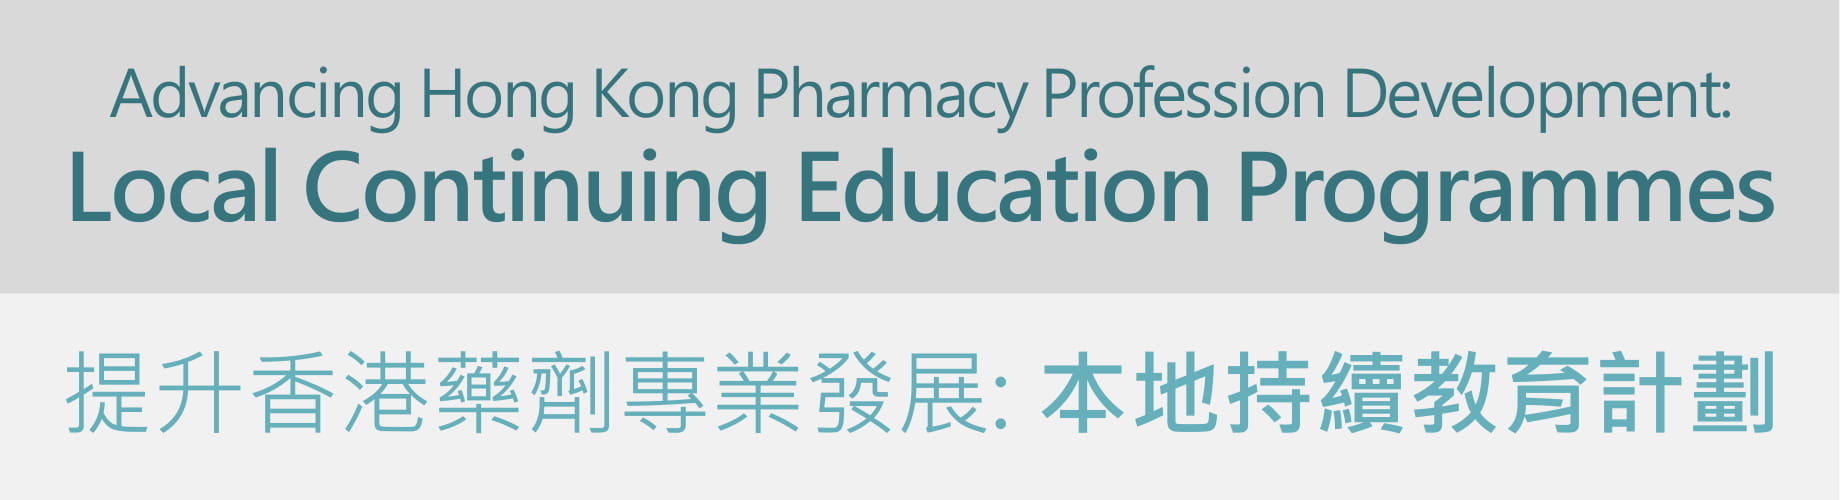 	 Advancing Hong Kong Pharmacy Profession Development – Local Continuing Education Programme